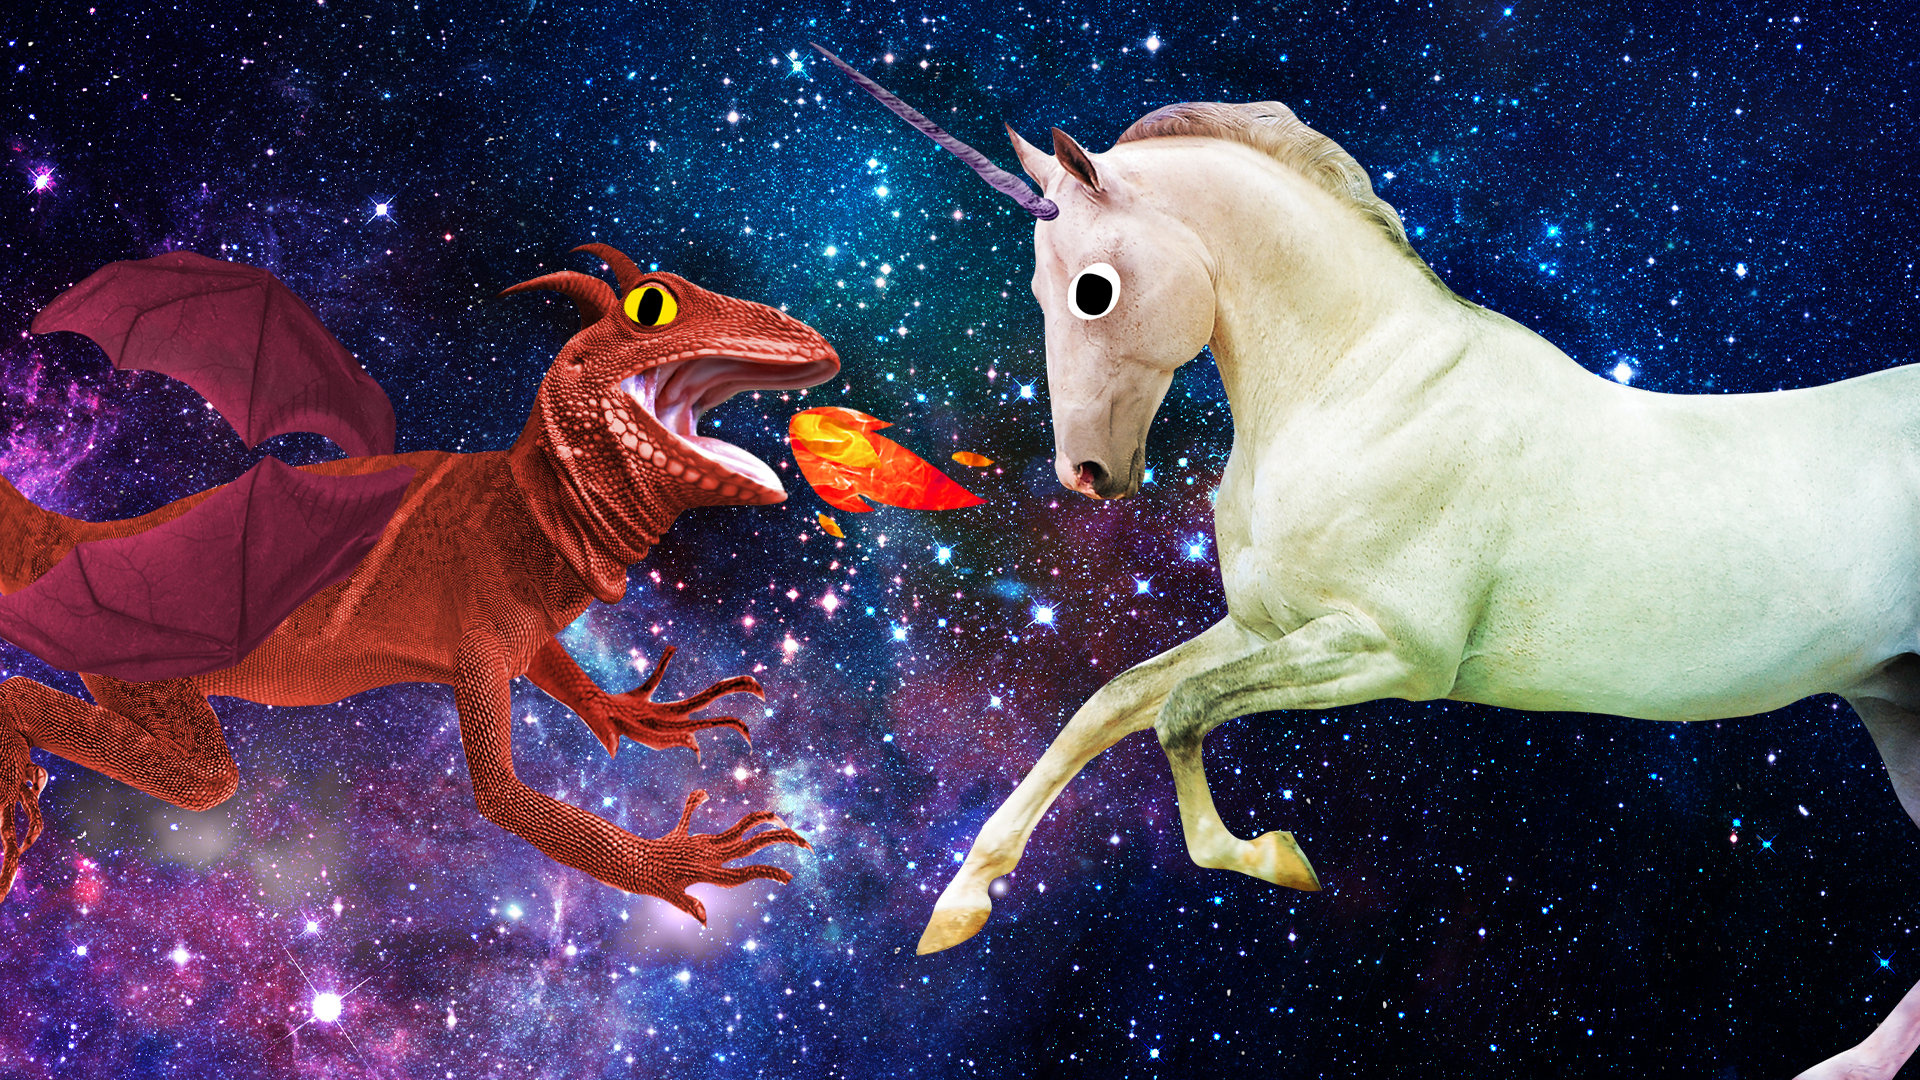 Beano dragon and unicorn on mystical background